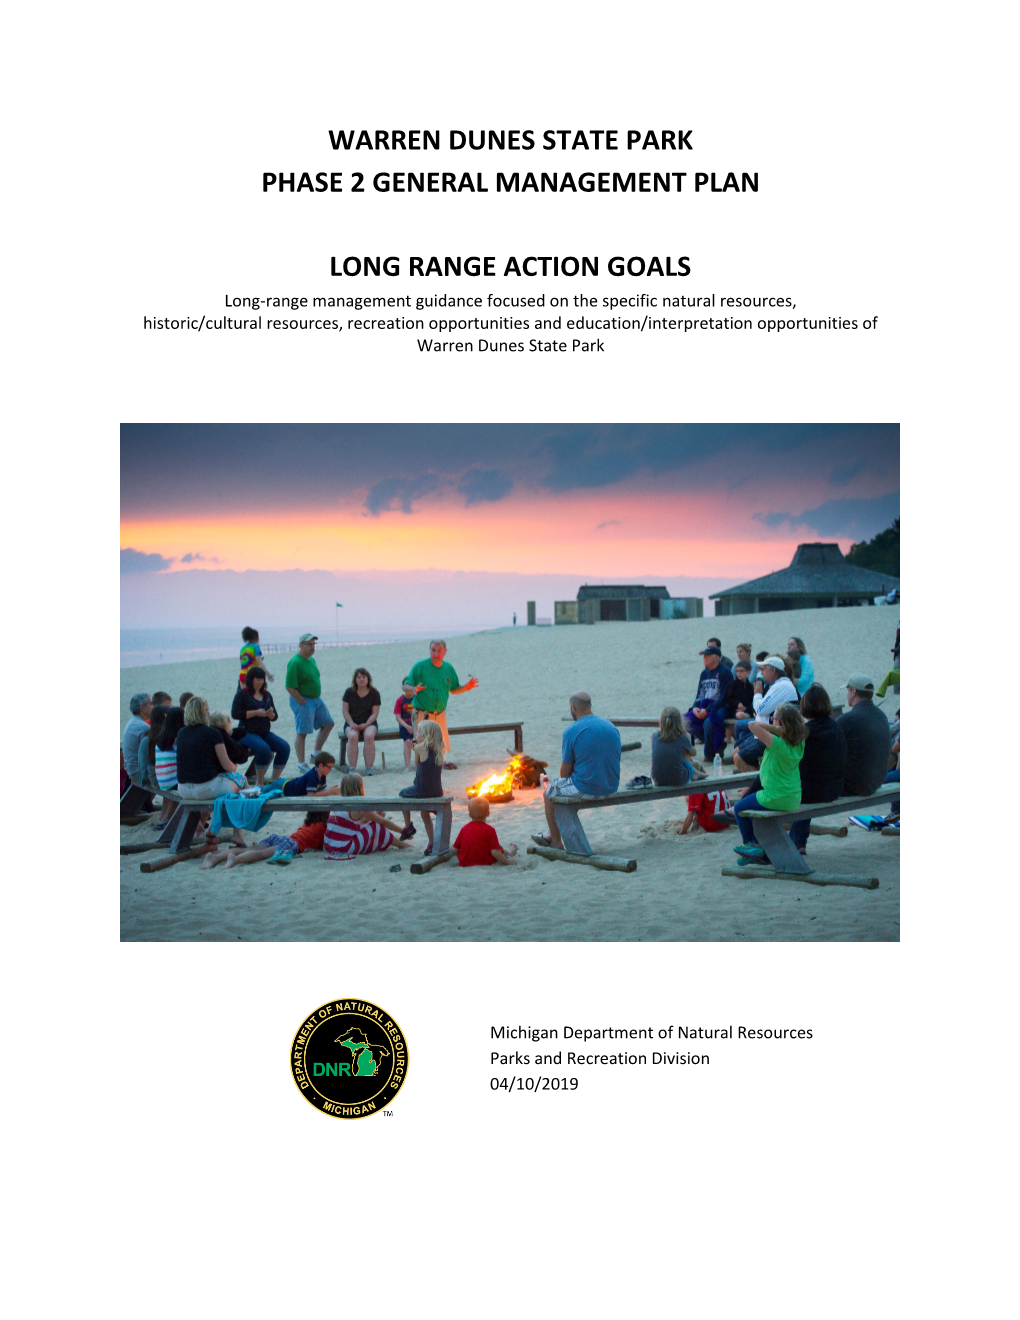 Warren Dunes State Park Phase 2 General Management Plan